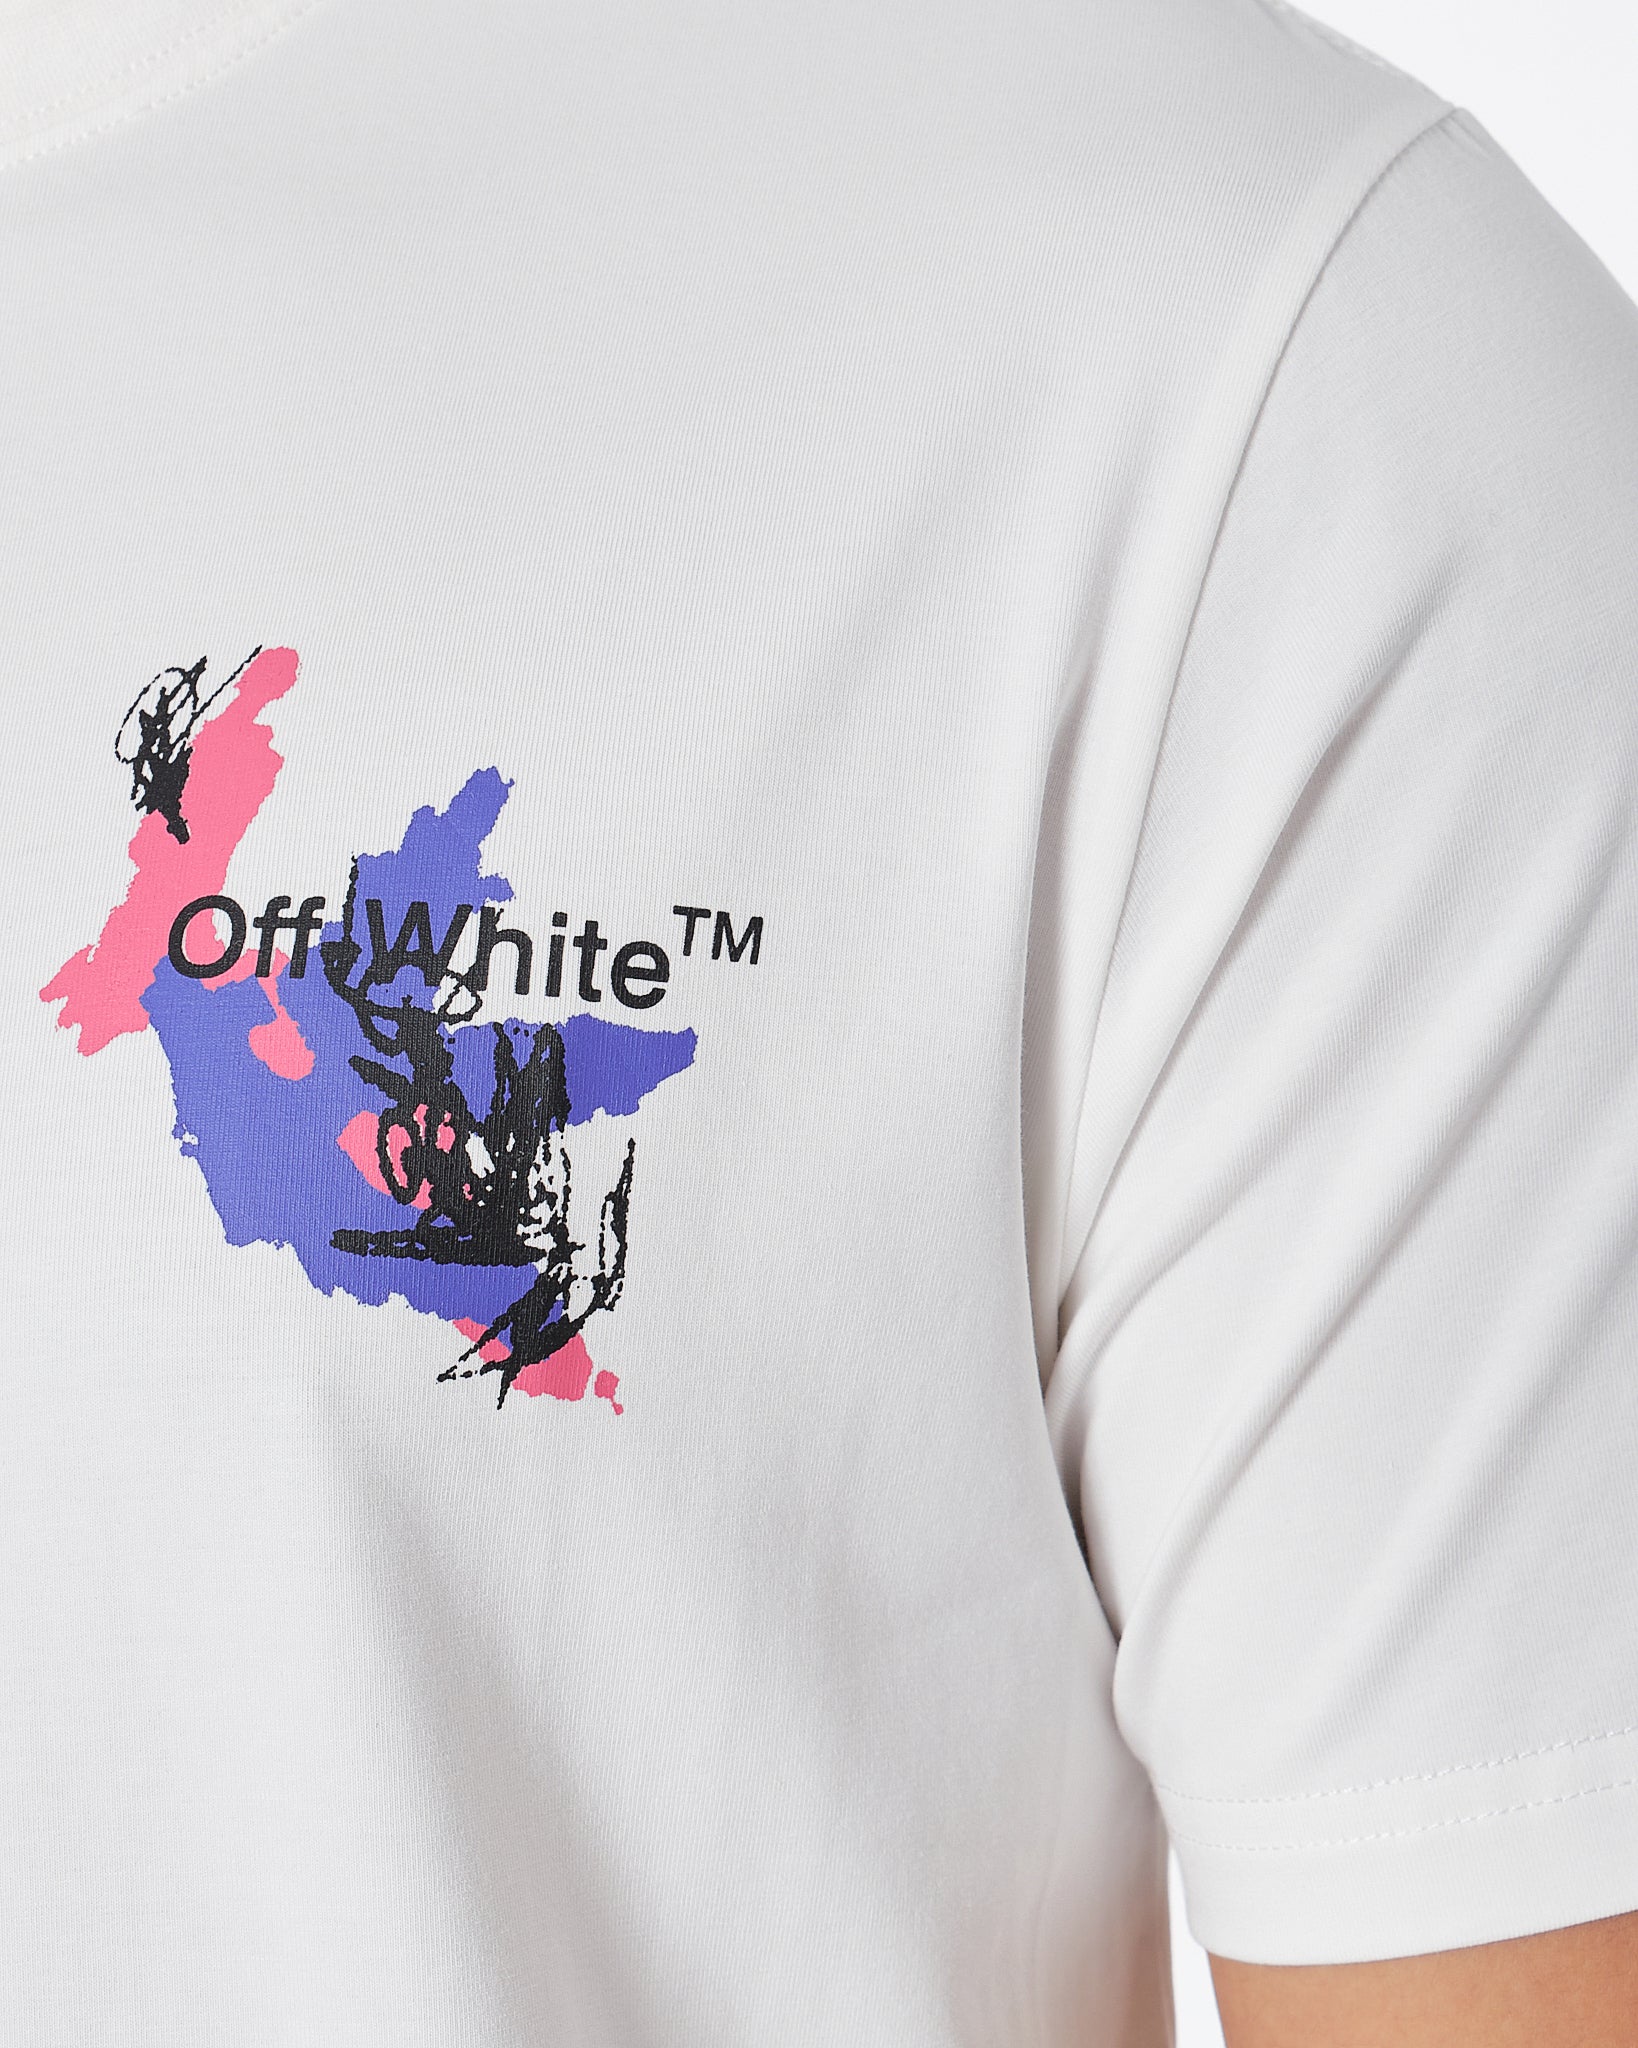 OW Cross Arrow Graffiti Back Printed Men White T-Shirt 20.90